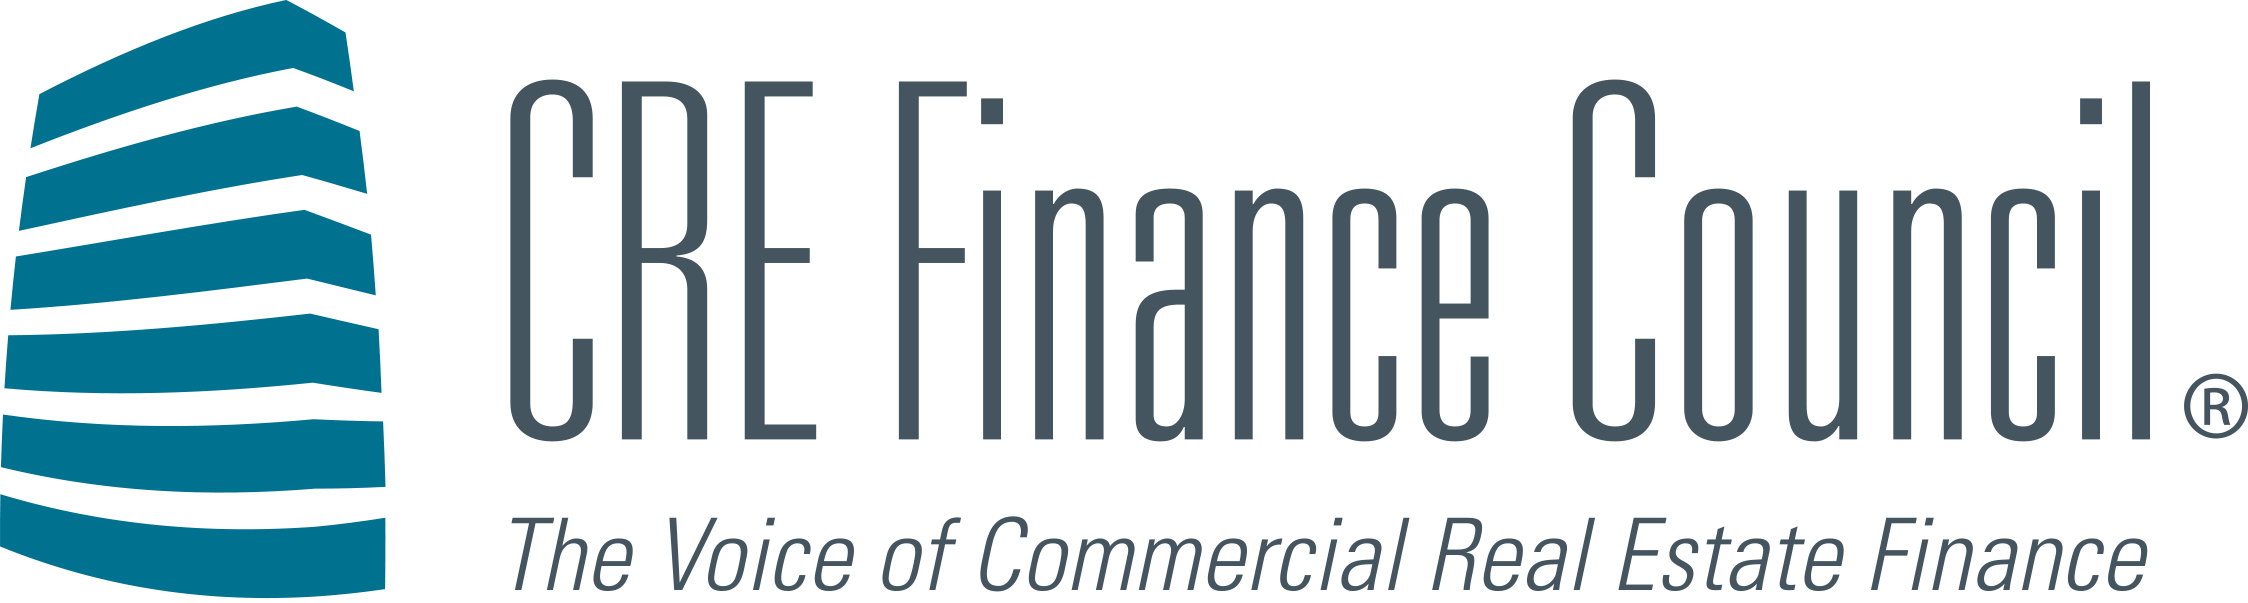 CRE Finance Council